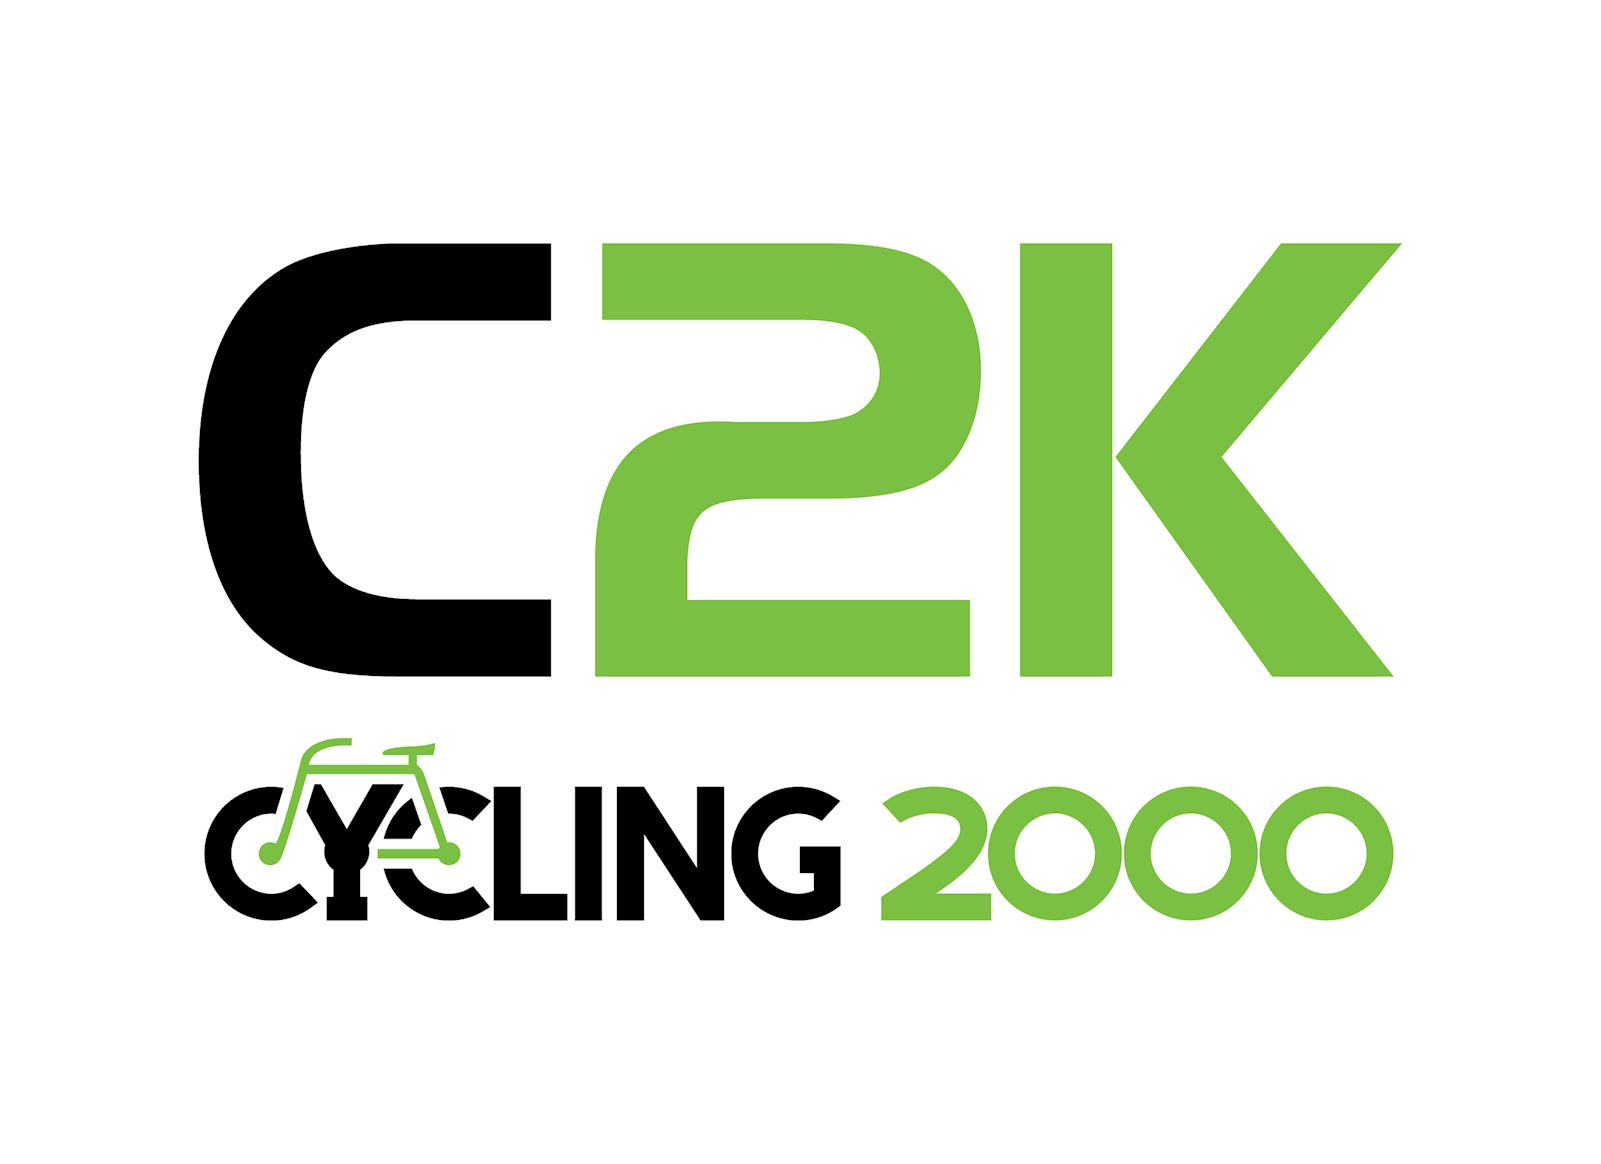 Cycling 2000